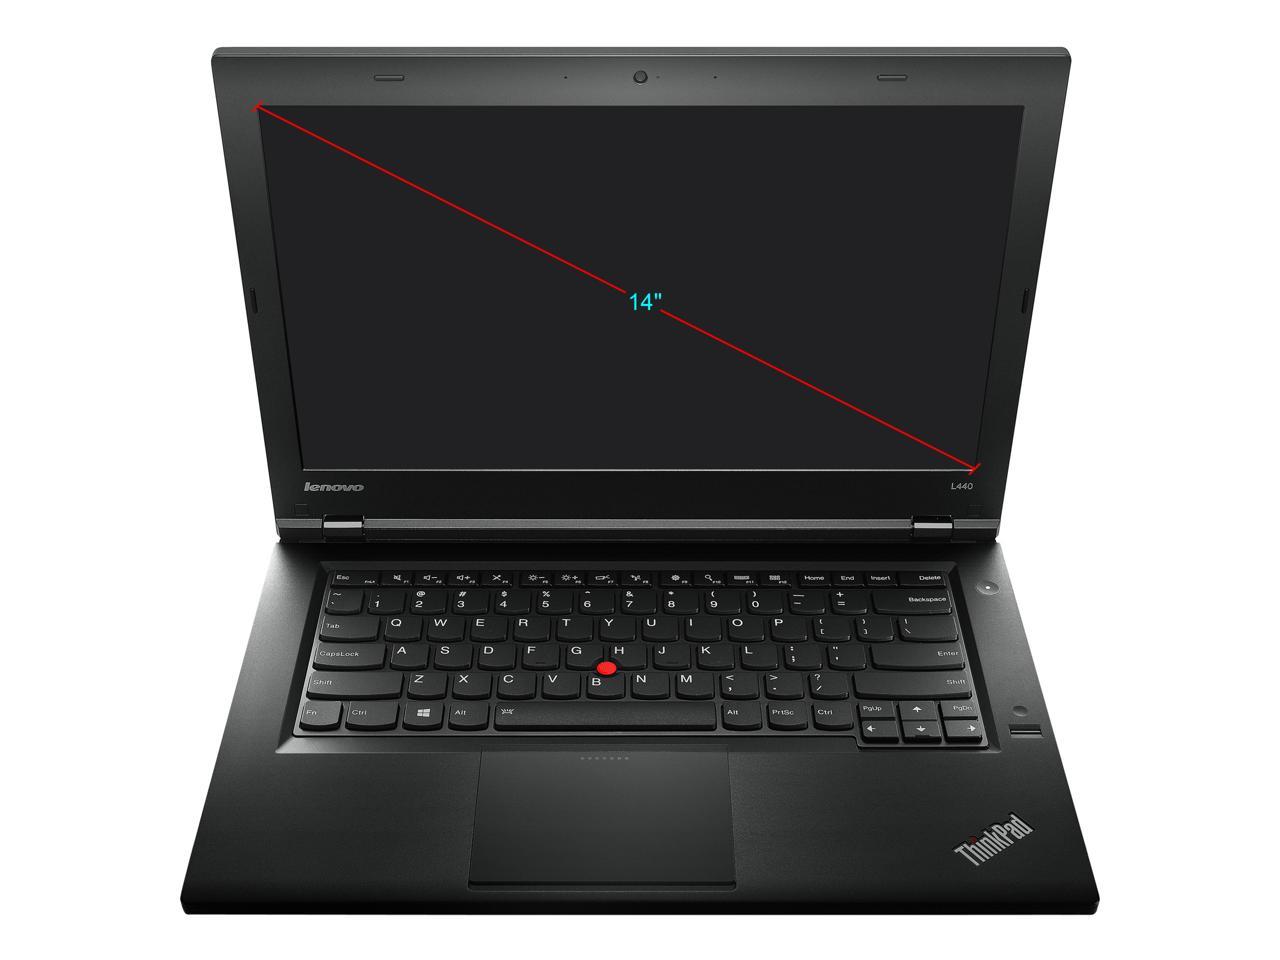 Lenovo Grade A Laptop ThinkPad L440 Intel Core i5 4th Gen 4200M (2.50 GHz) 8 GB Memory 512 GB SSD Intel HD Graphics 4600 14.0" Windows 10 Pro 64-bit